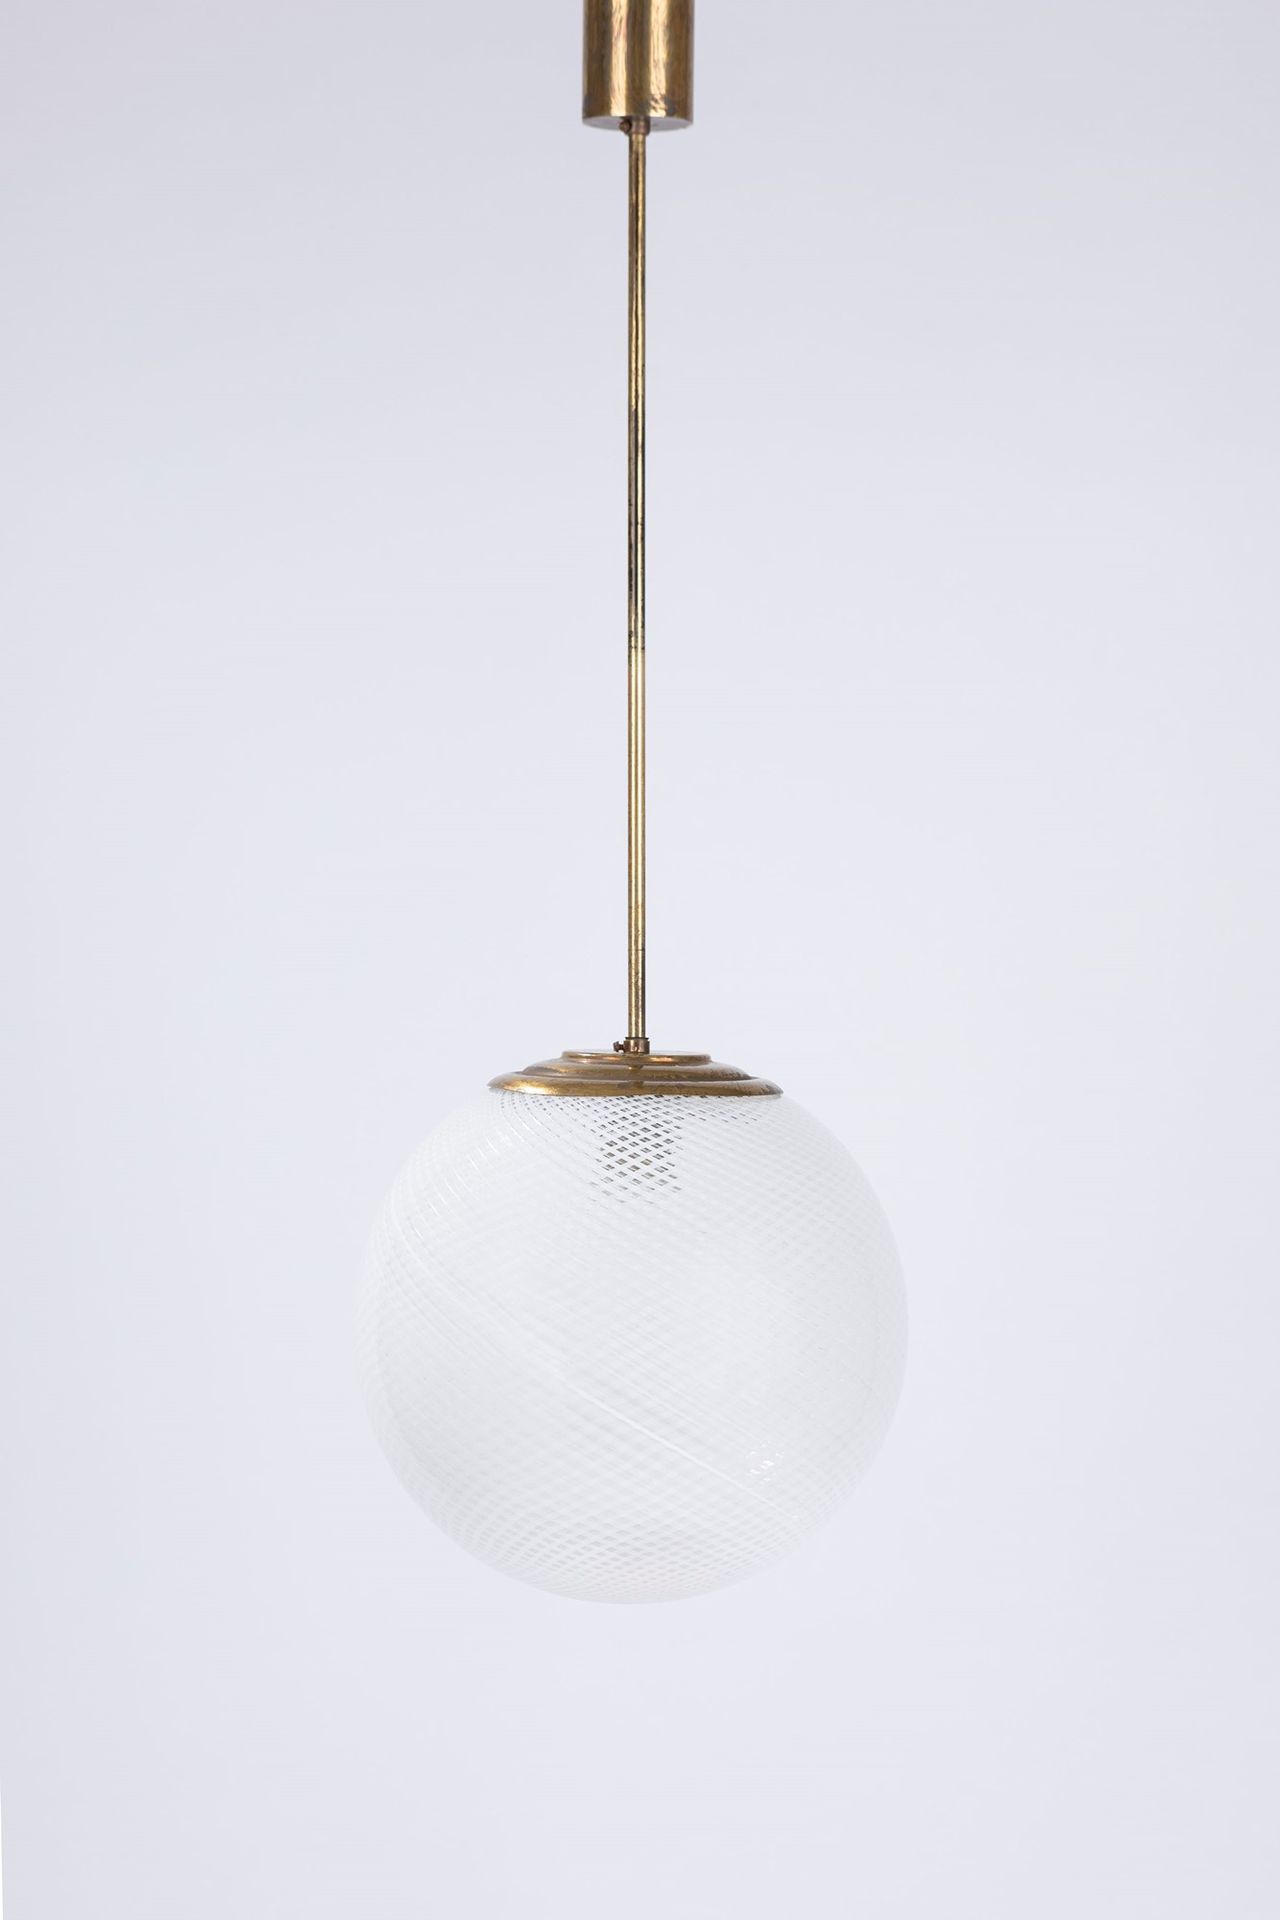 CARLO SCARPA Hanging lamp, 1930 ca.

Diam 23 cm
reticello glass, metal structure&hellip;